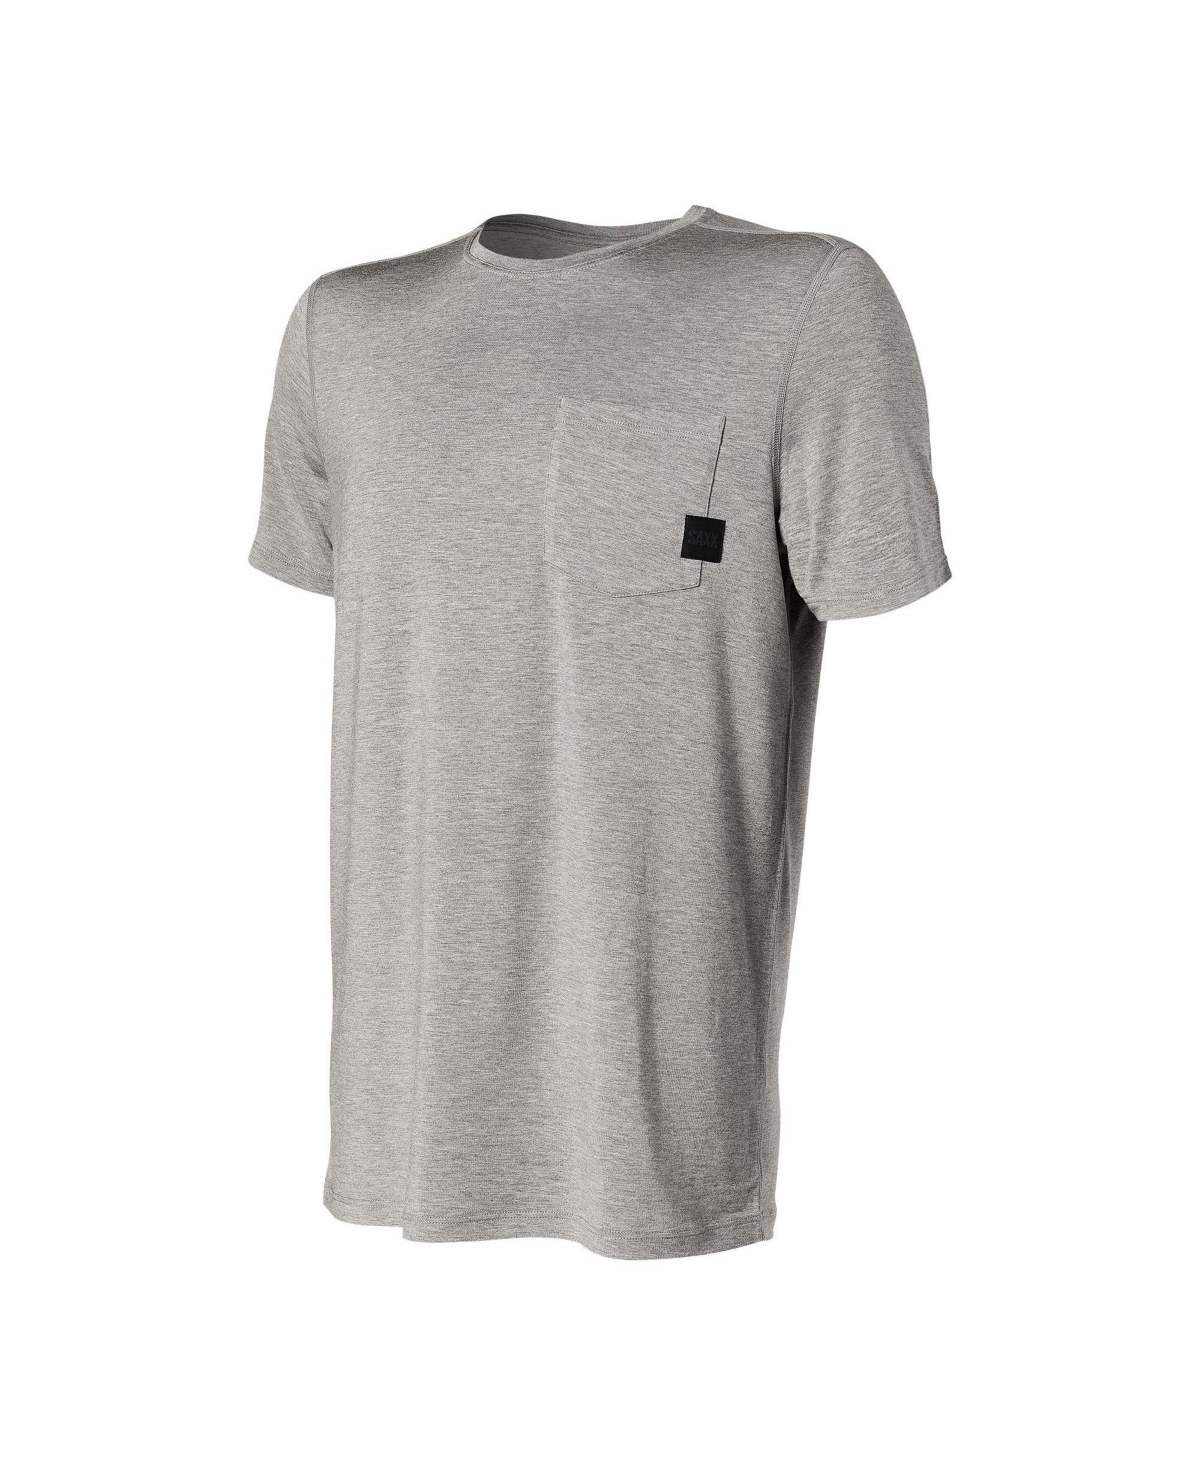 Saxx Men's Sleepwalker Short Sleeves Pocket T-shirt In Dark Gray Heather